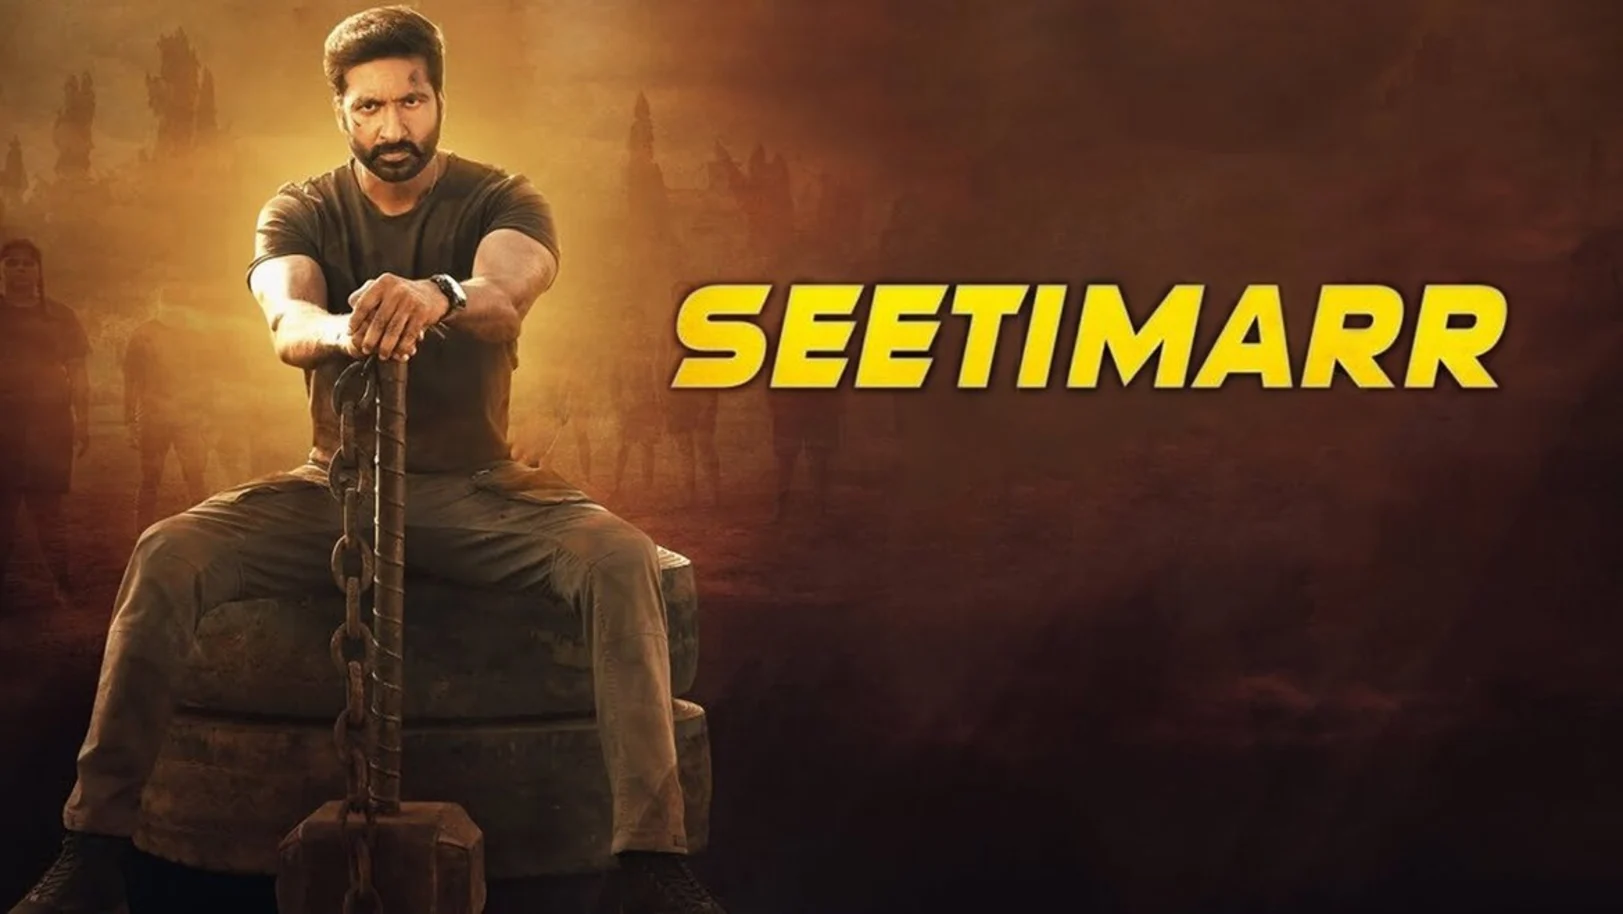 Seetimaarr Streaming Now On Zee Anmol Cinema